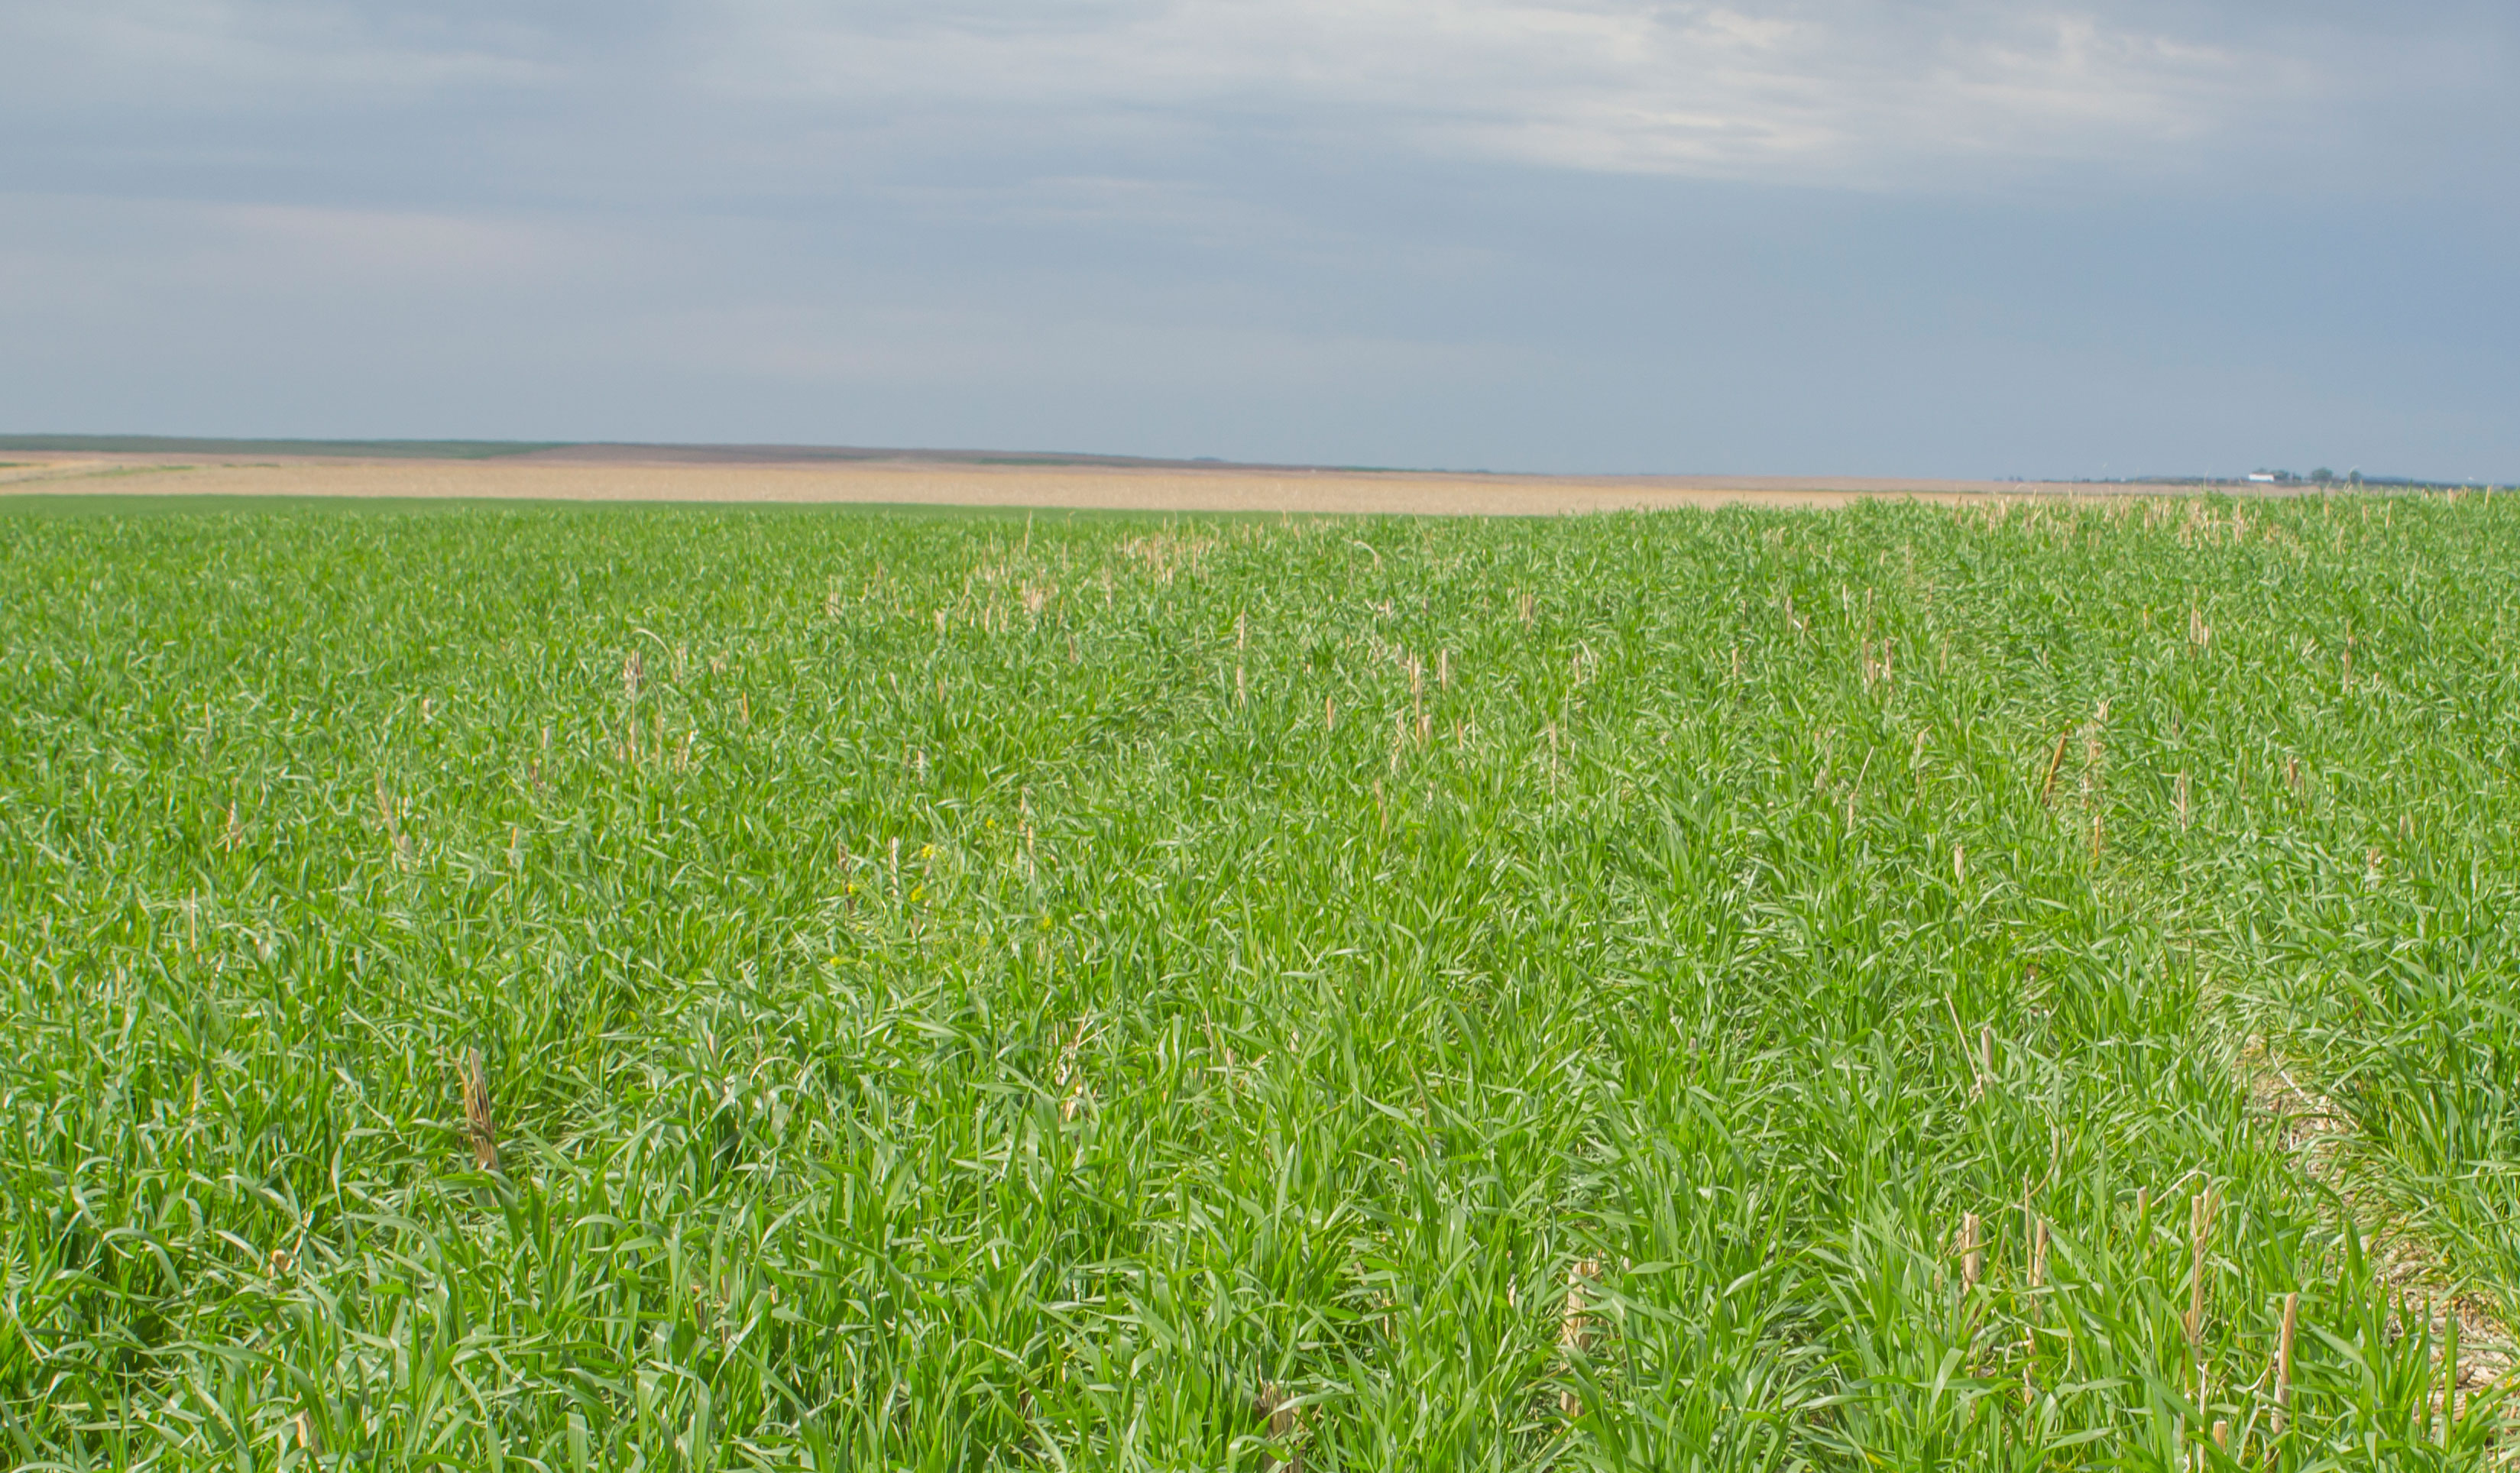 Spring wheat growing in a no-till field. Courtesy: USDA NRCS South Dakota, (CC BY-SA 2.0)